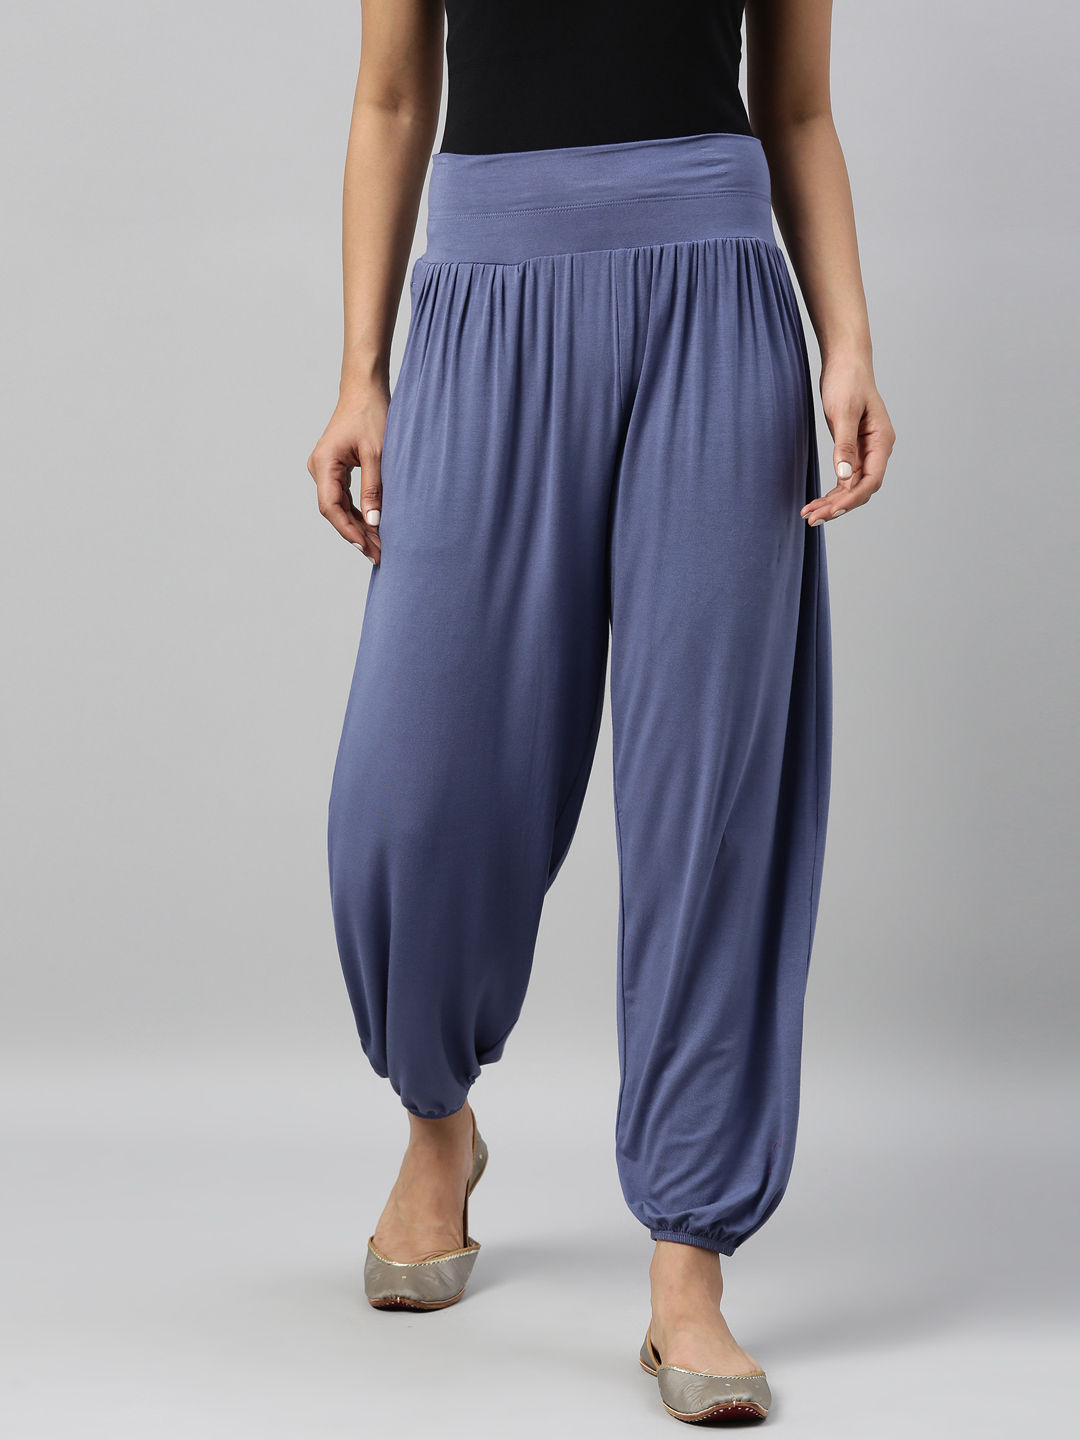 Buy Online Winmaarc Pure Cotton Harem Indian Trouser Yoga Aladdin Harem  Pants - Zifiti.com 577229